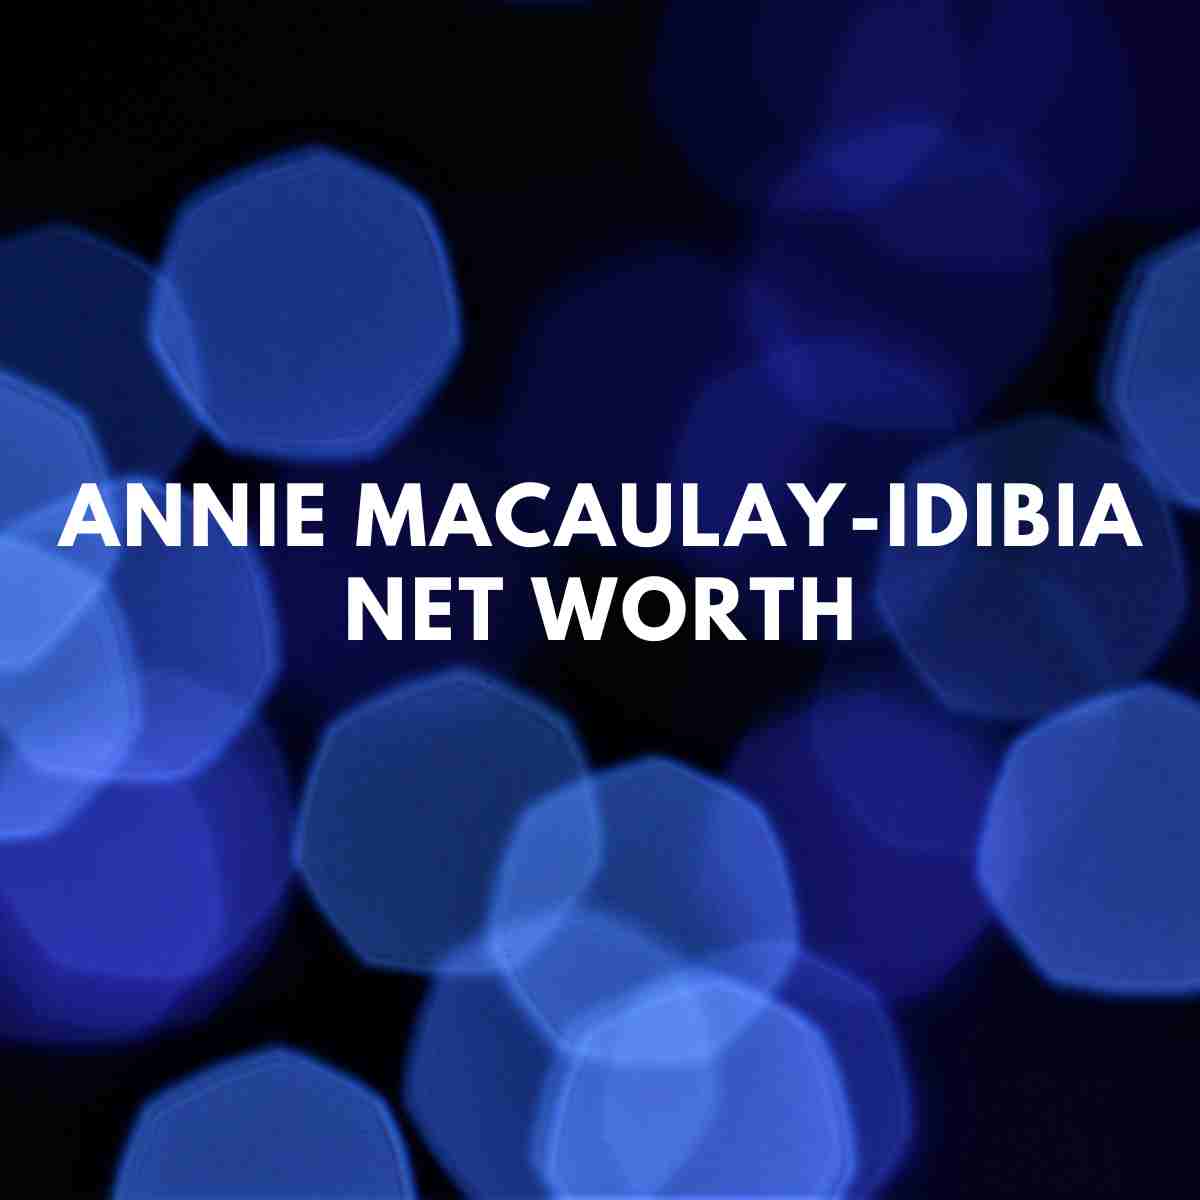 Annie Macaulay-Idibia net worth